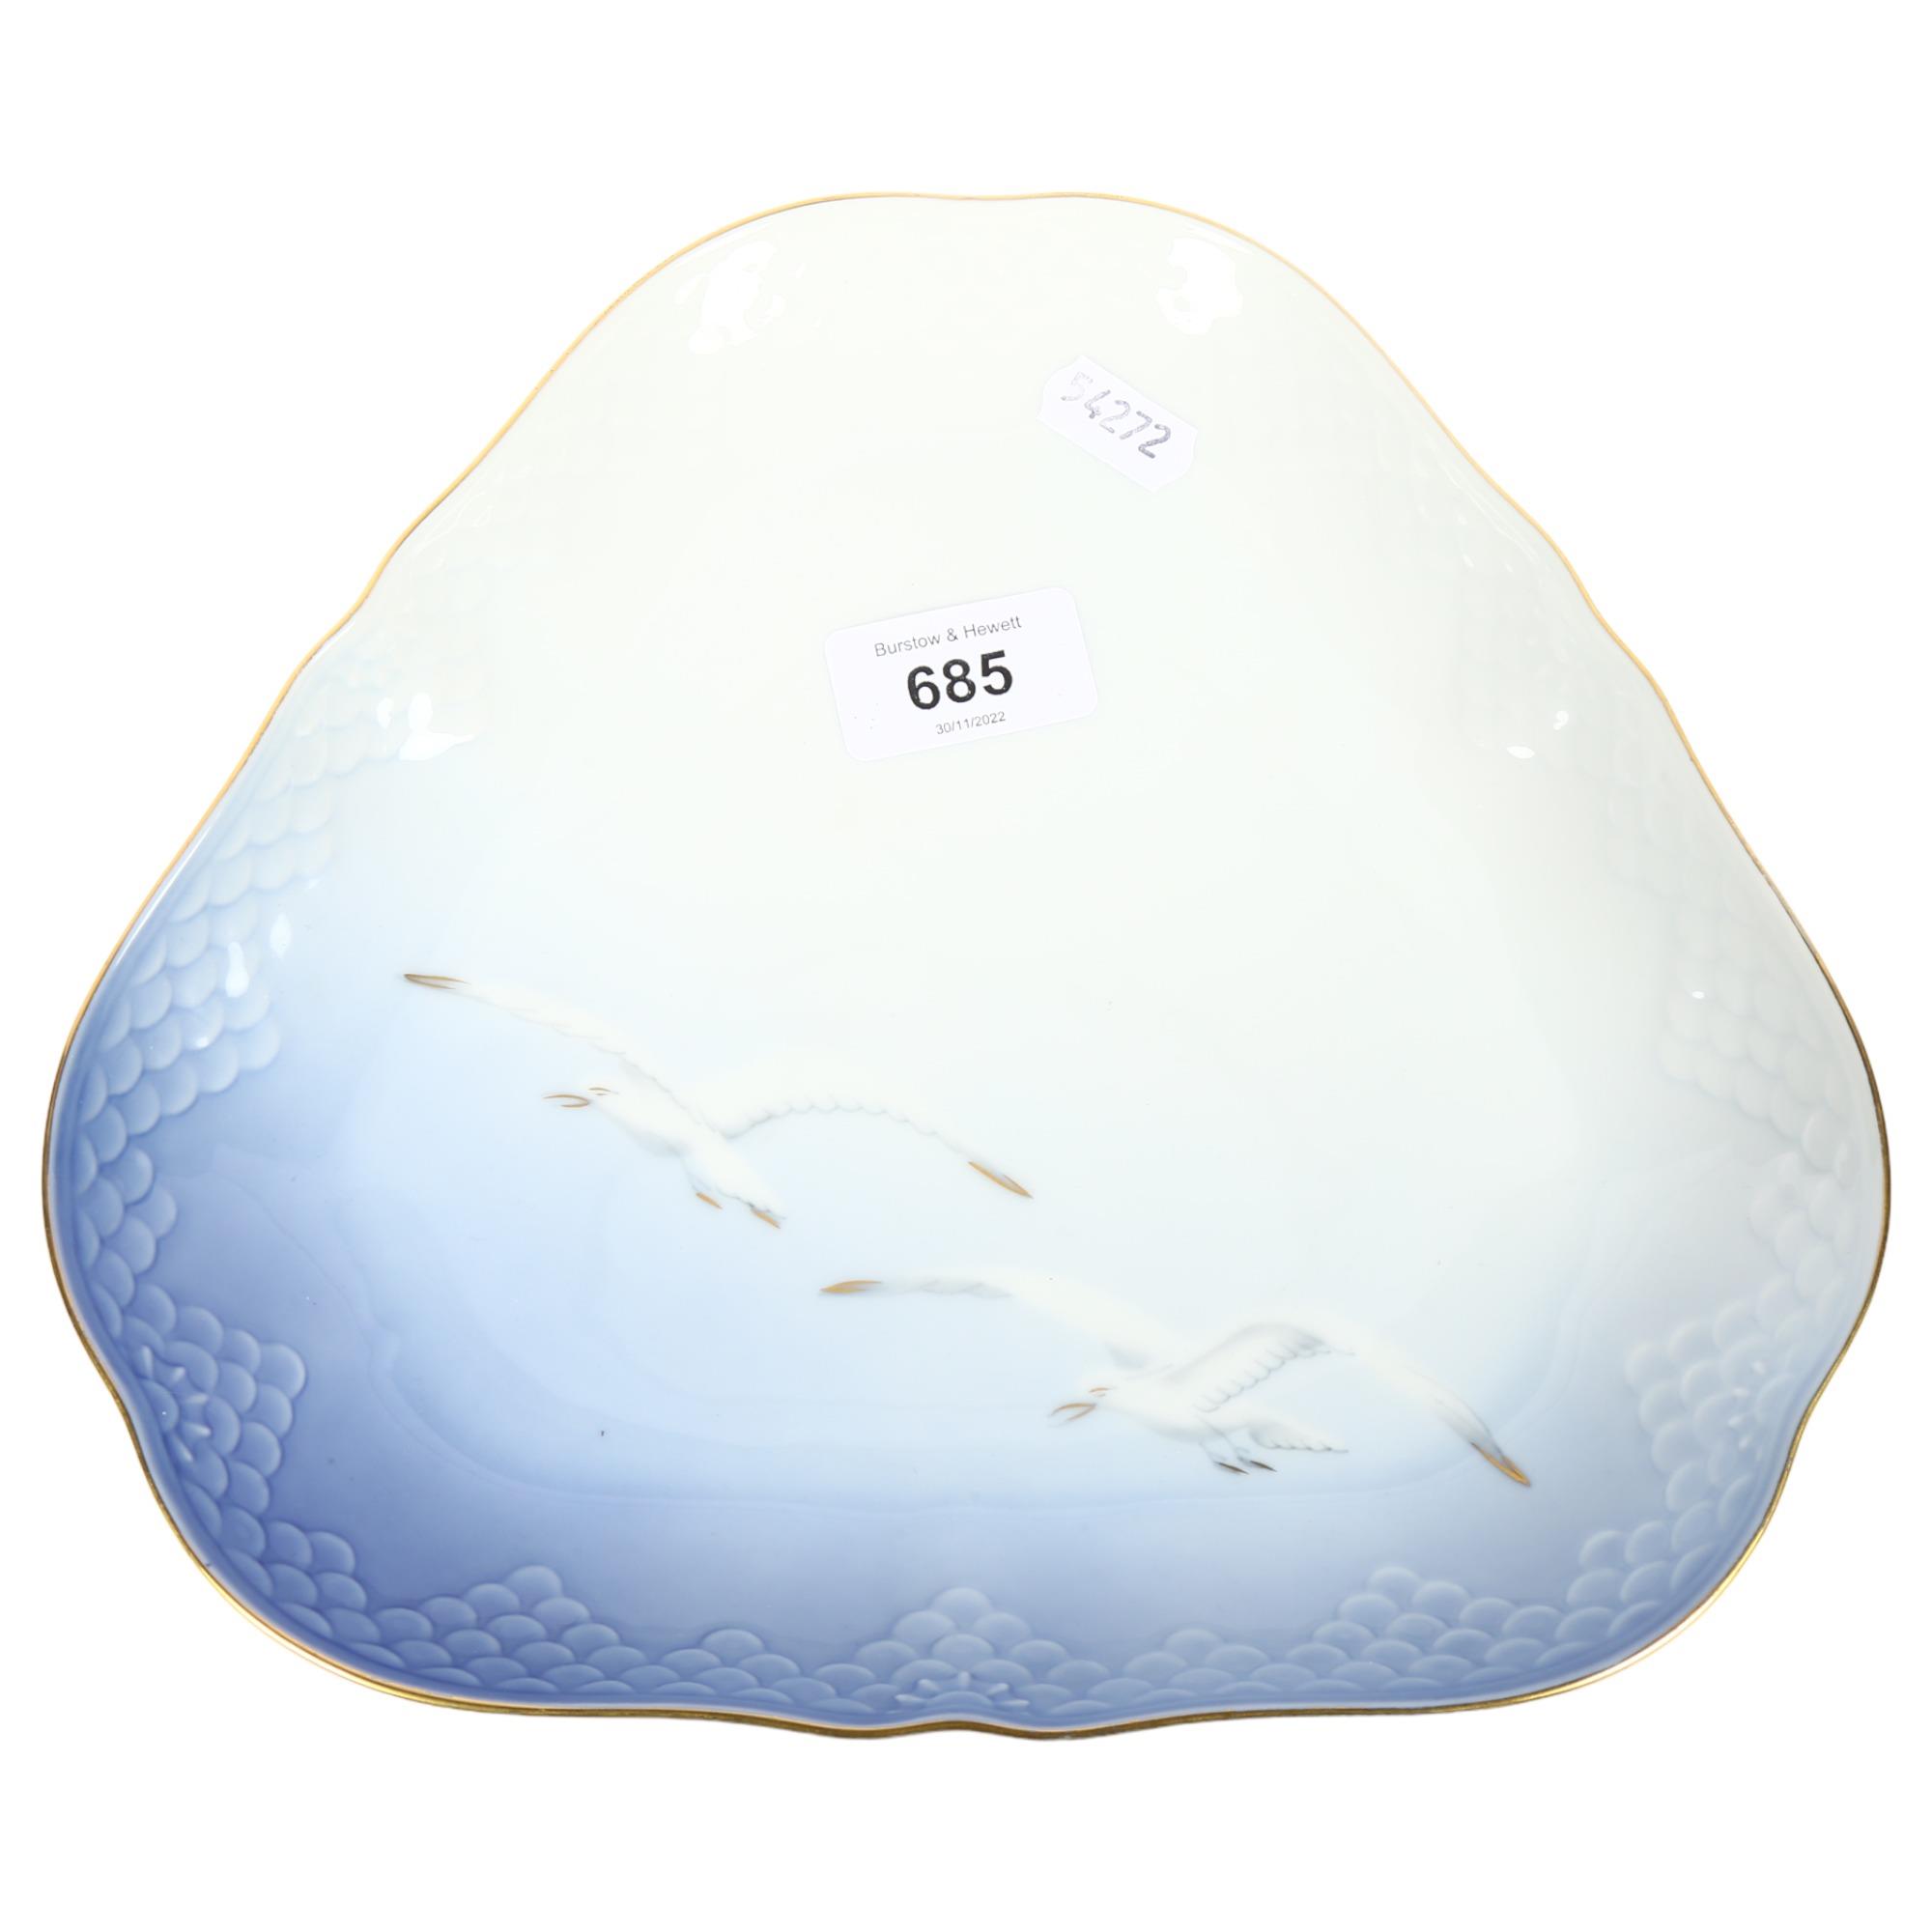 Danish B & G porcelain dish with painted seagull design, 23cm across